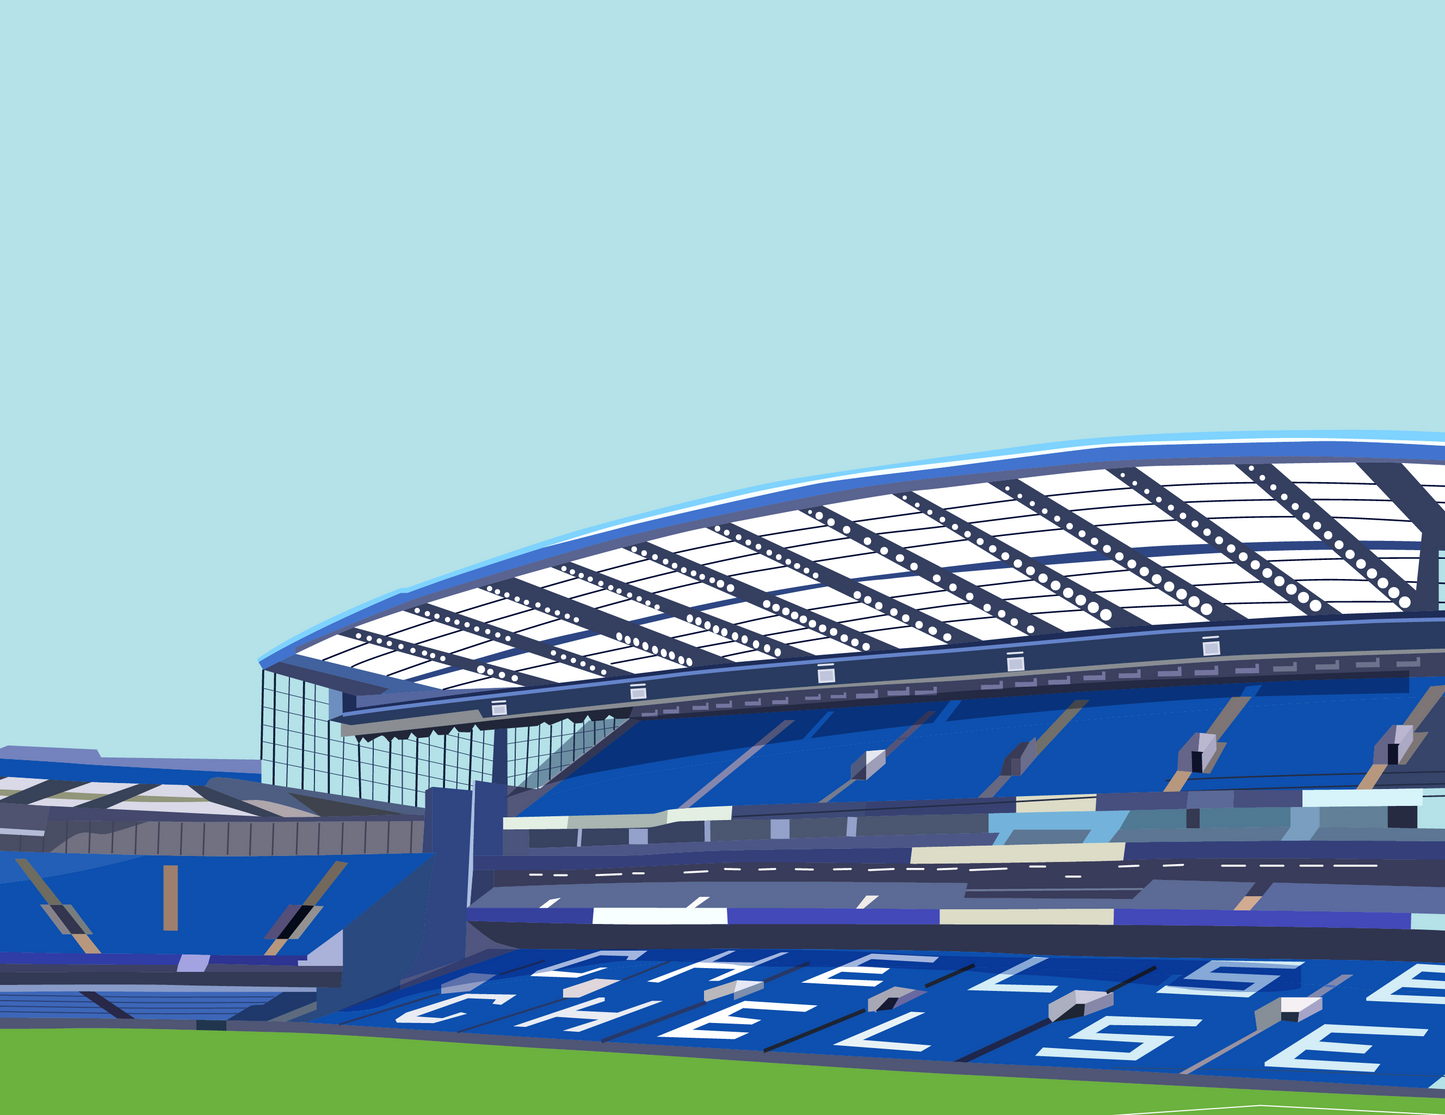 Stamford Bridge - Chelsea